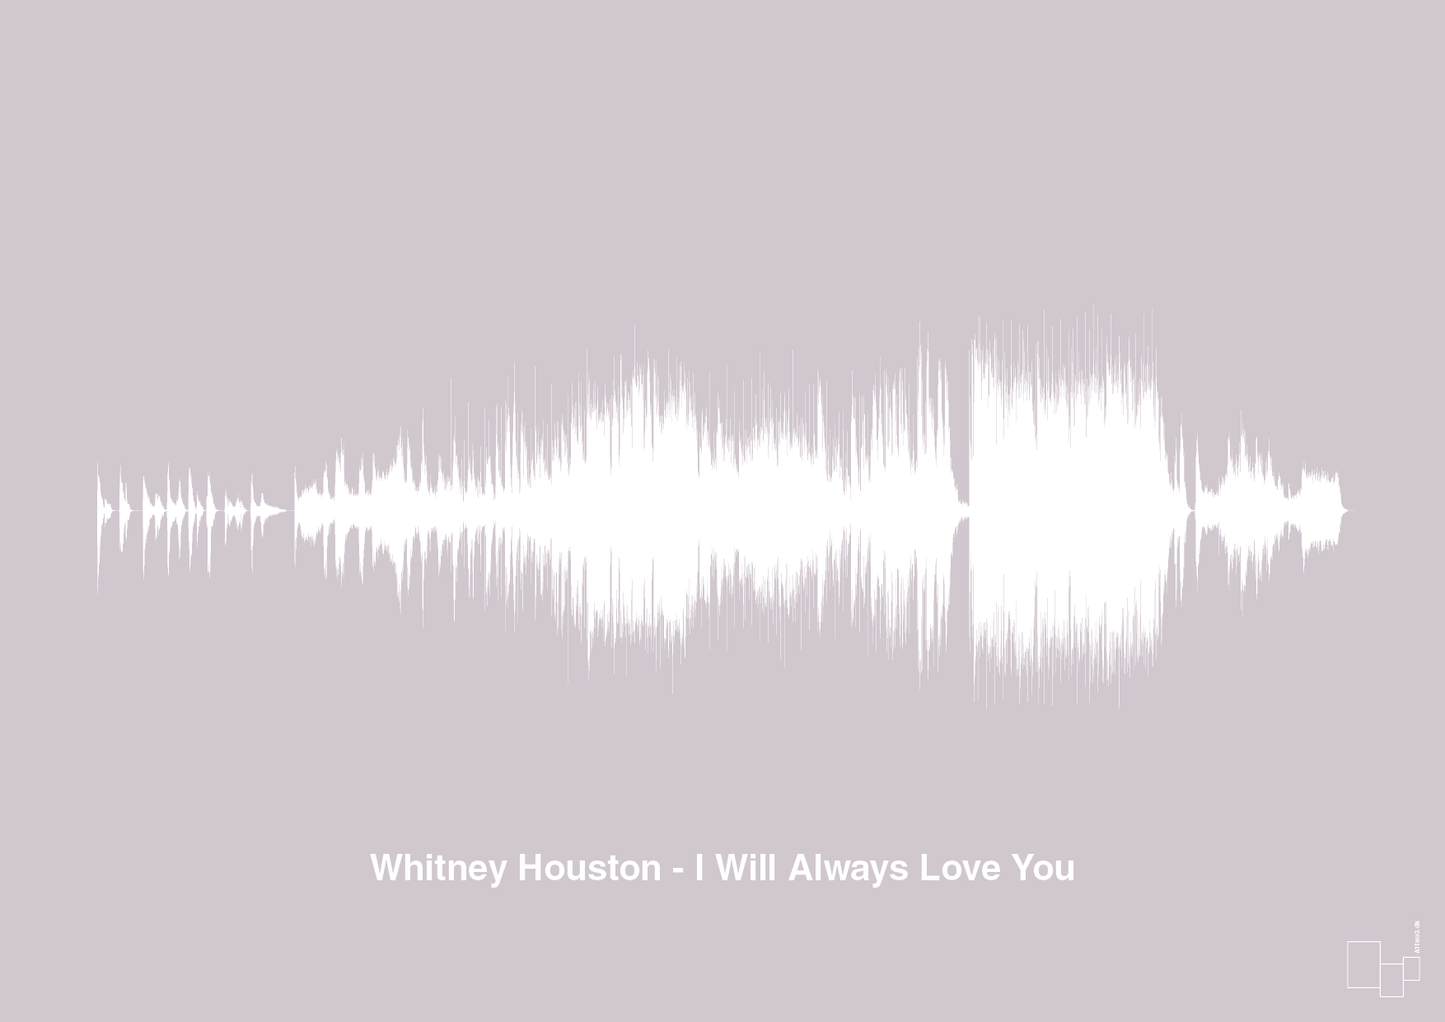 whitney houston - i will always love you - Plakat med Musik i Dusty Lilac